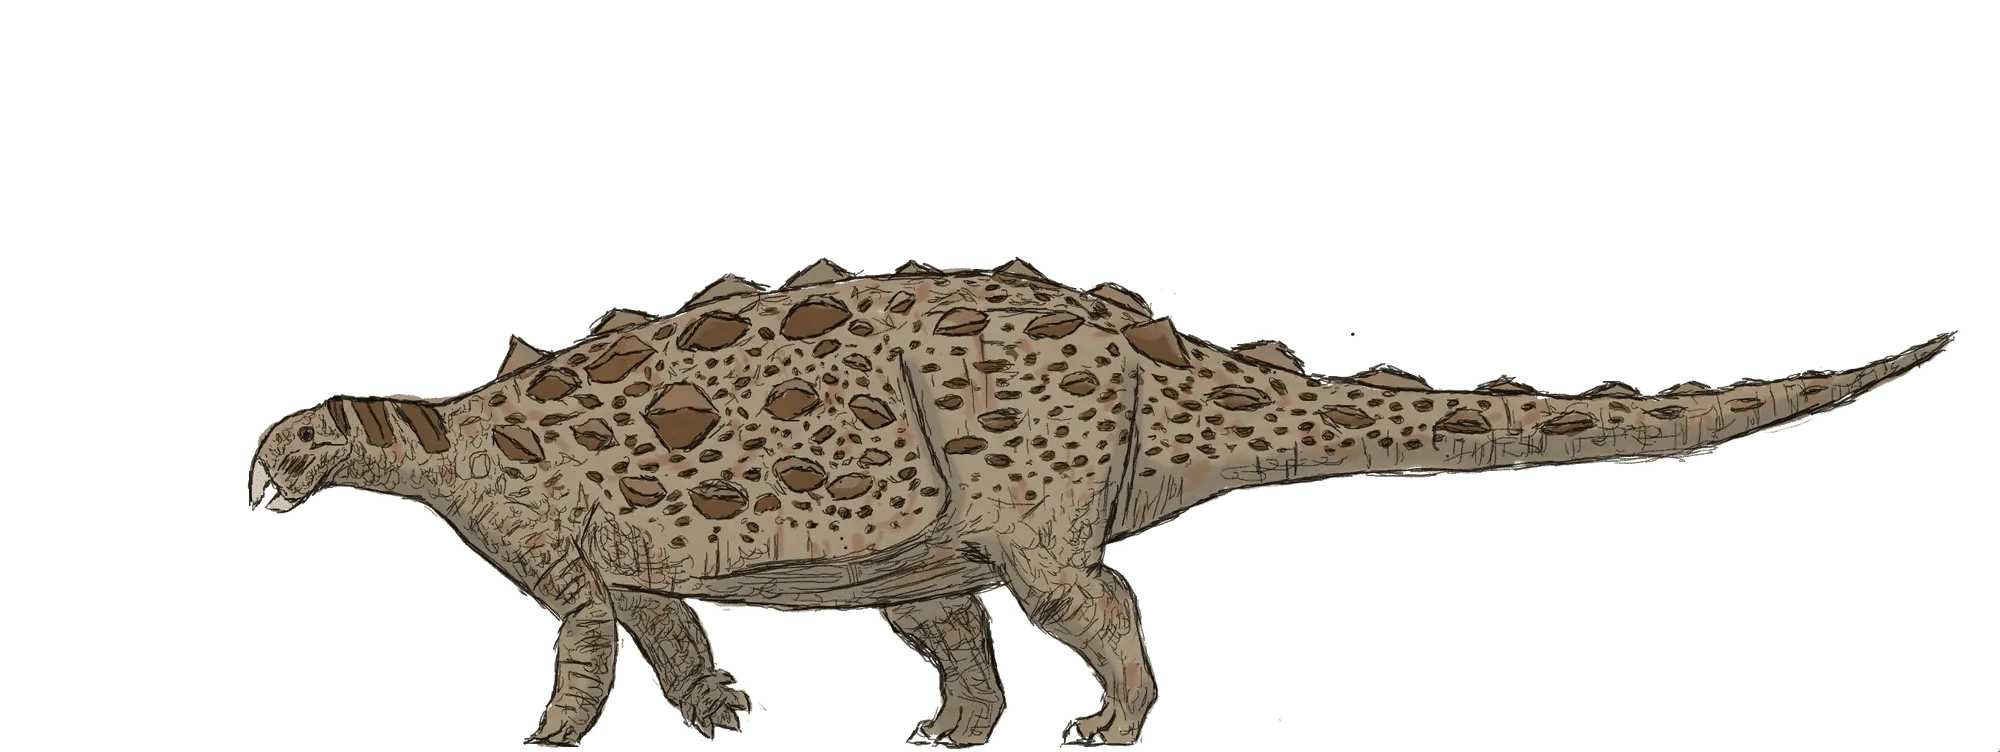 Gobisaurus domoculus was a primitive herbivore ankylosaurid ankylosaur